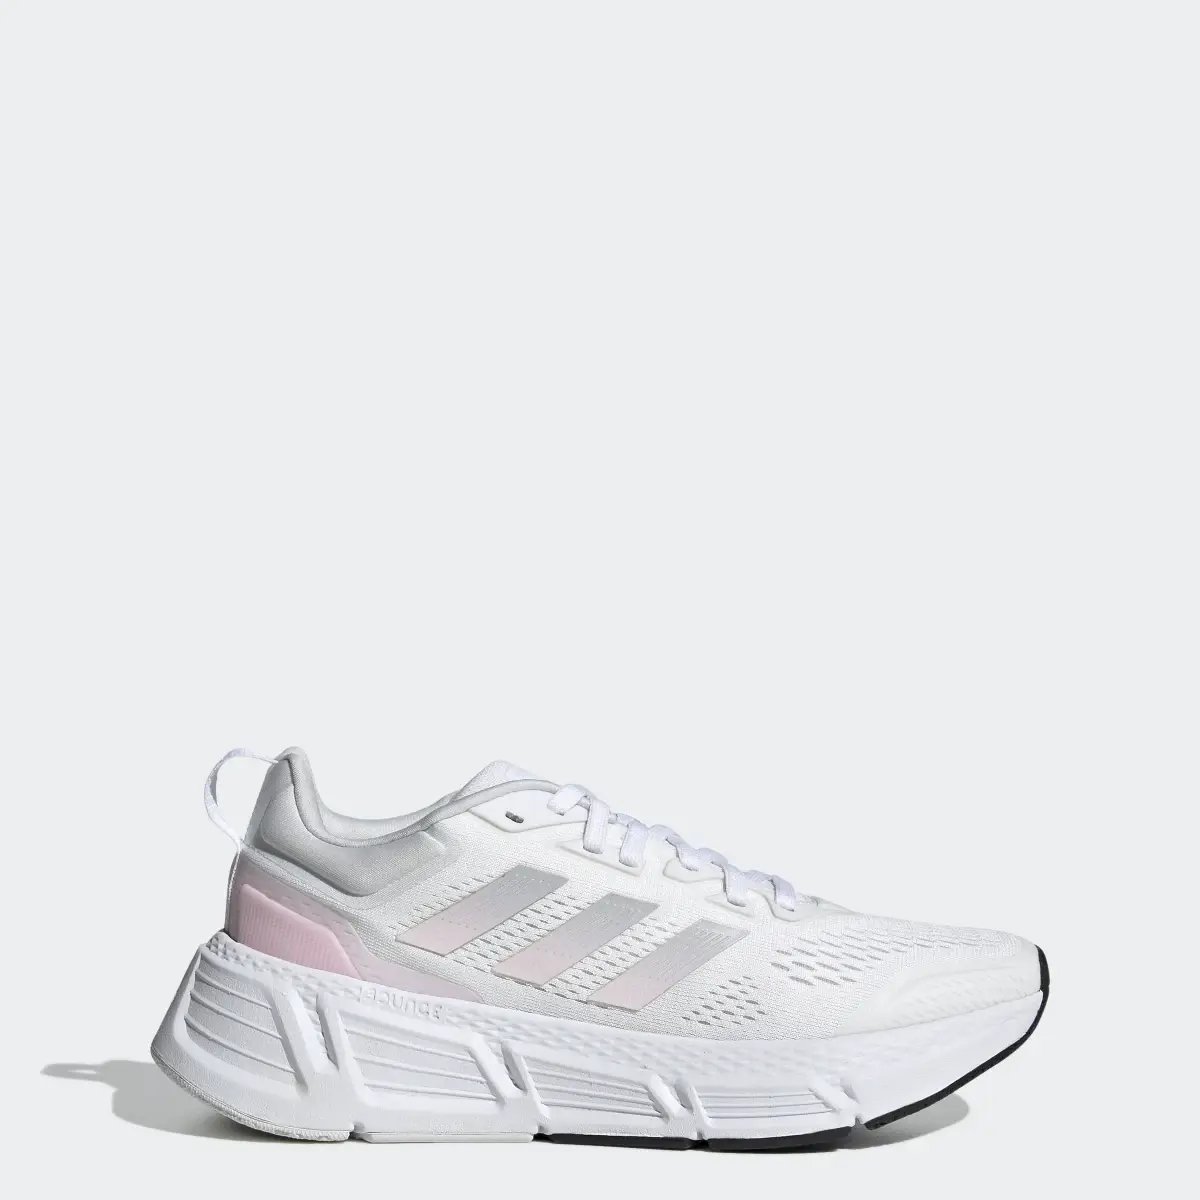 Adidas Questar Schuh. 1